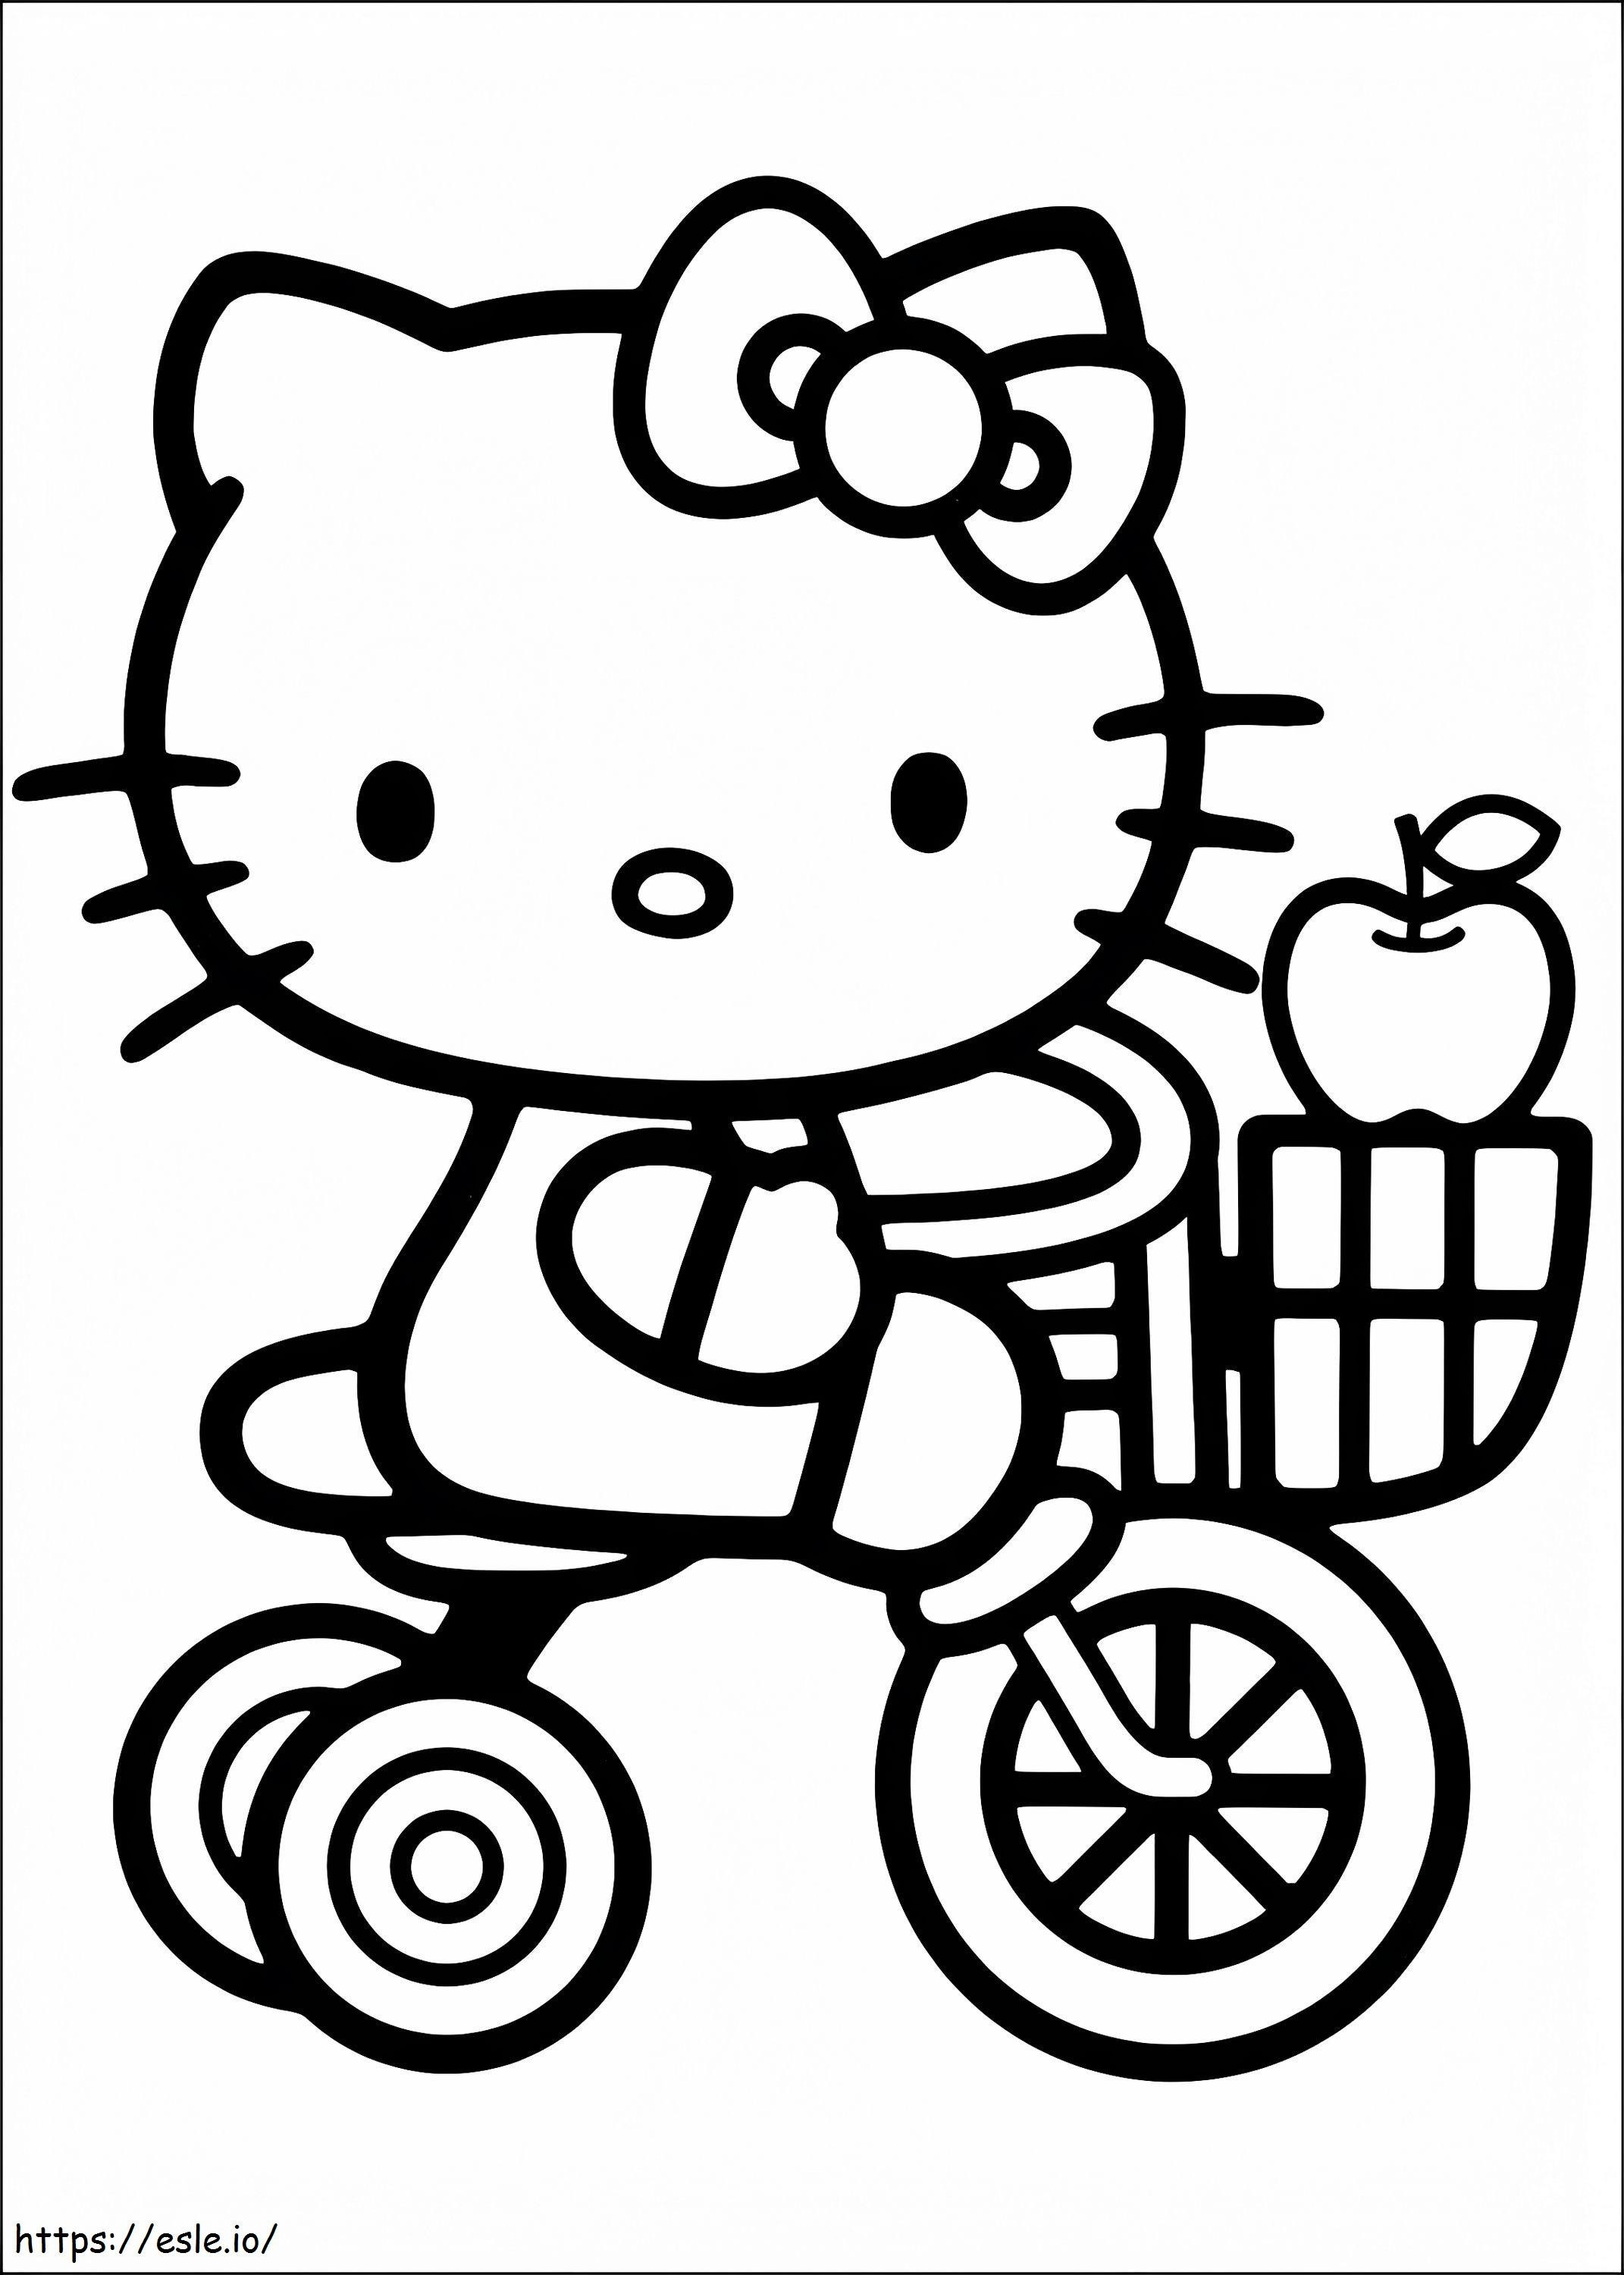 1534321139 Hello Kitty Rowerowa A4 kolorowanka